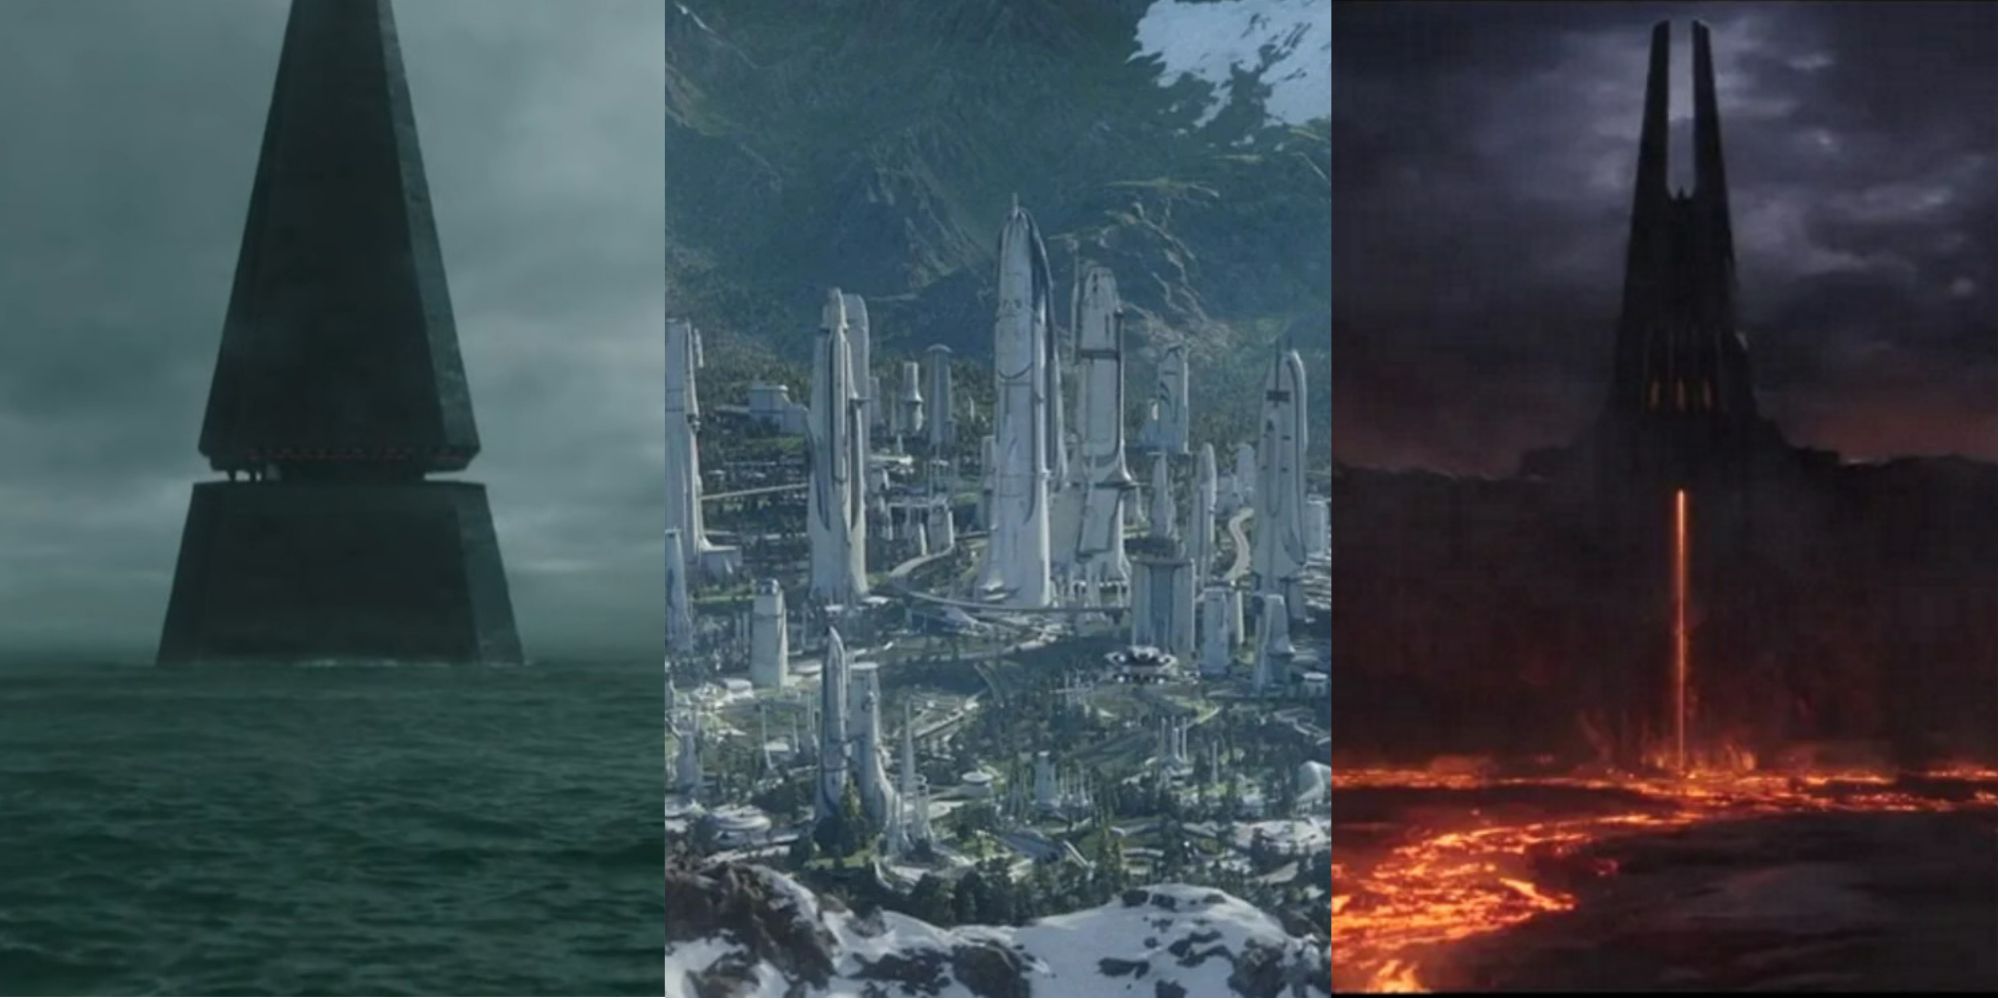 Star Wars Obi-Wan Planets Split Image featuring Nur, Alderaan, and Vader's castle on Mustafar